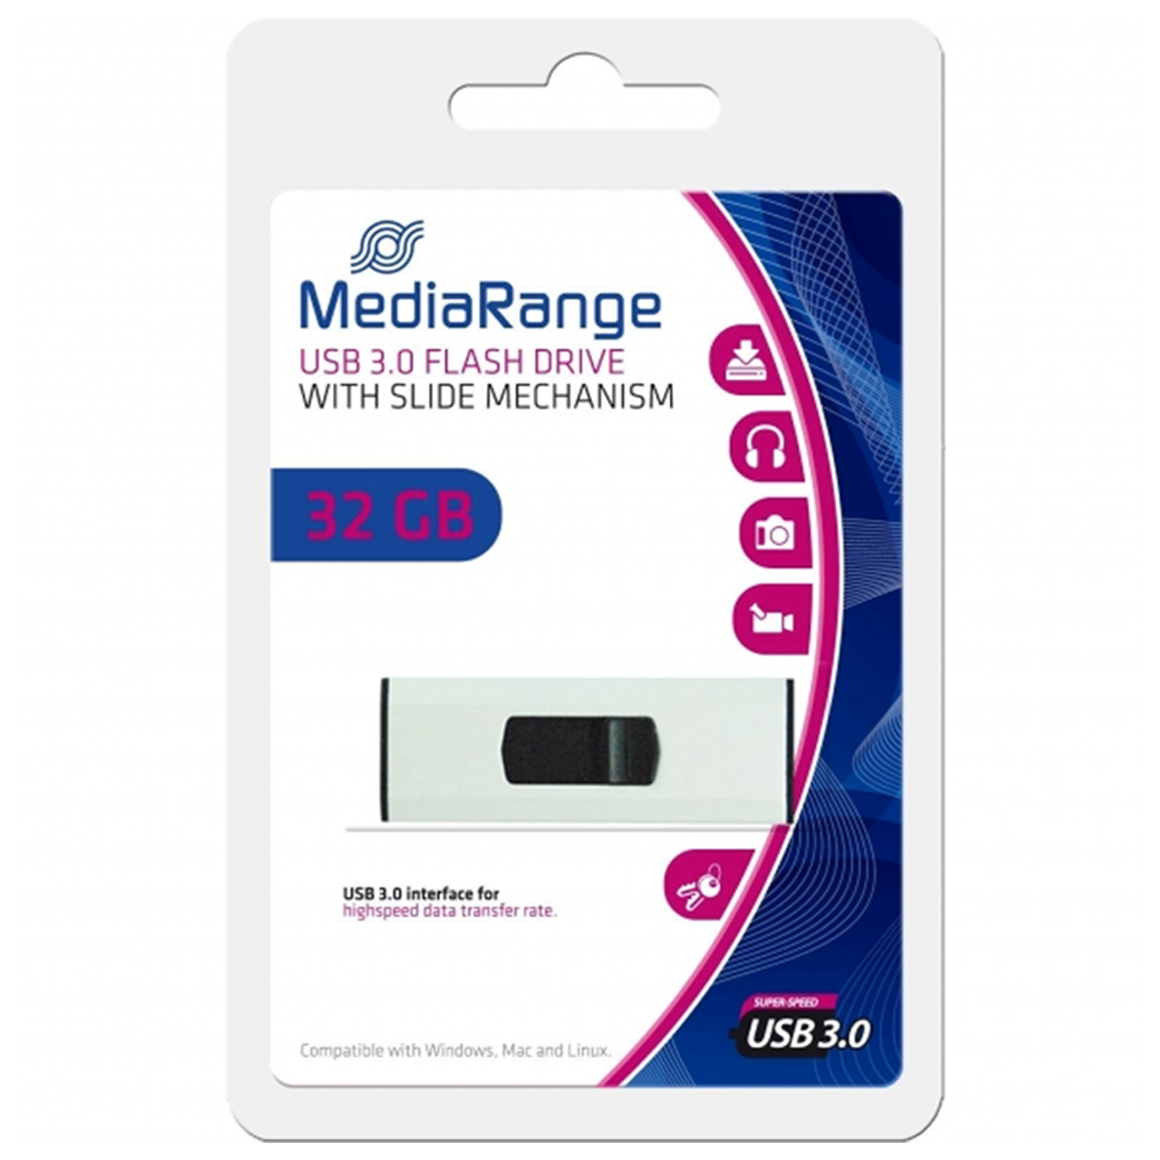 MediaRange USB 3.0 Flash Drive, 32 GB